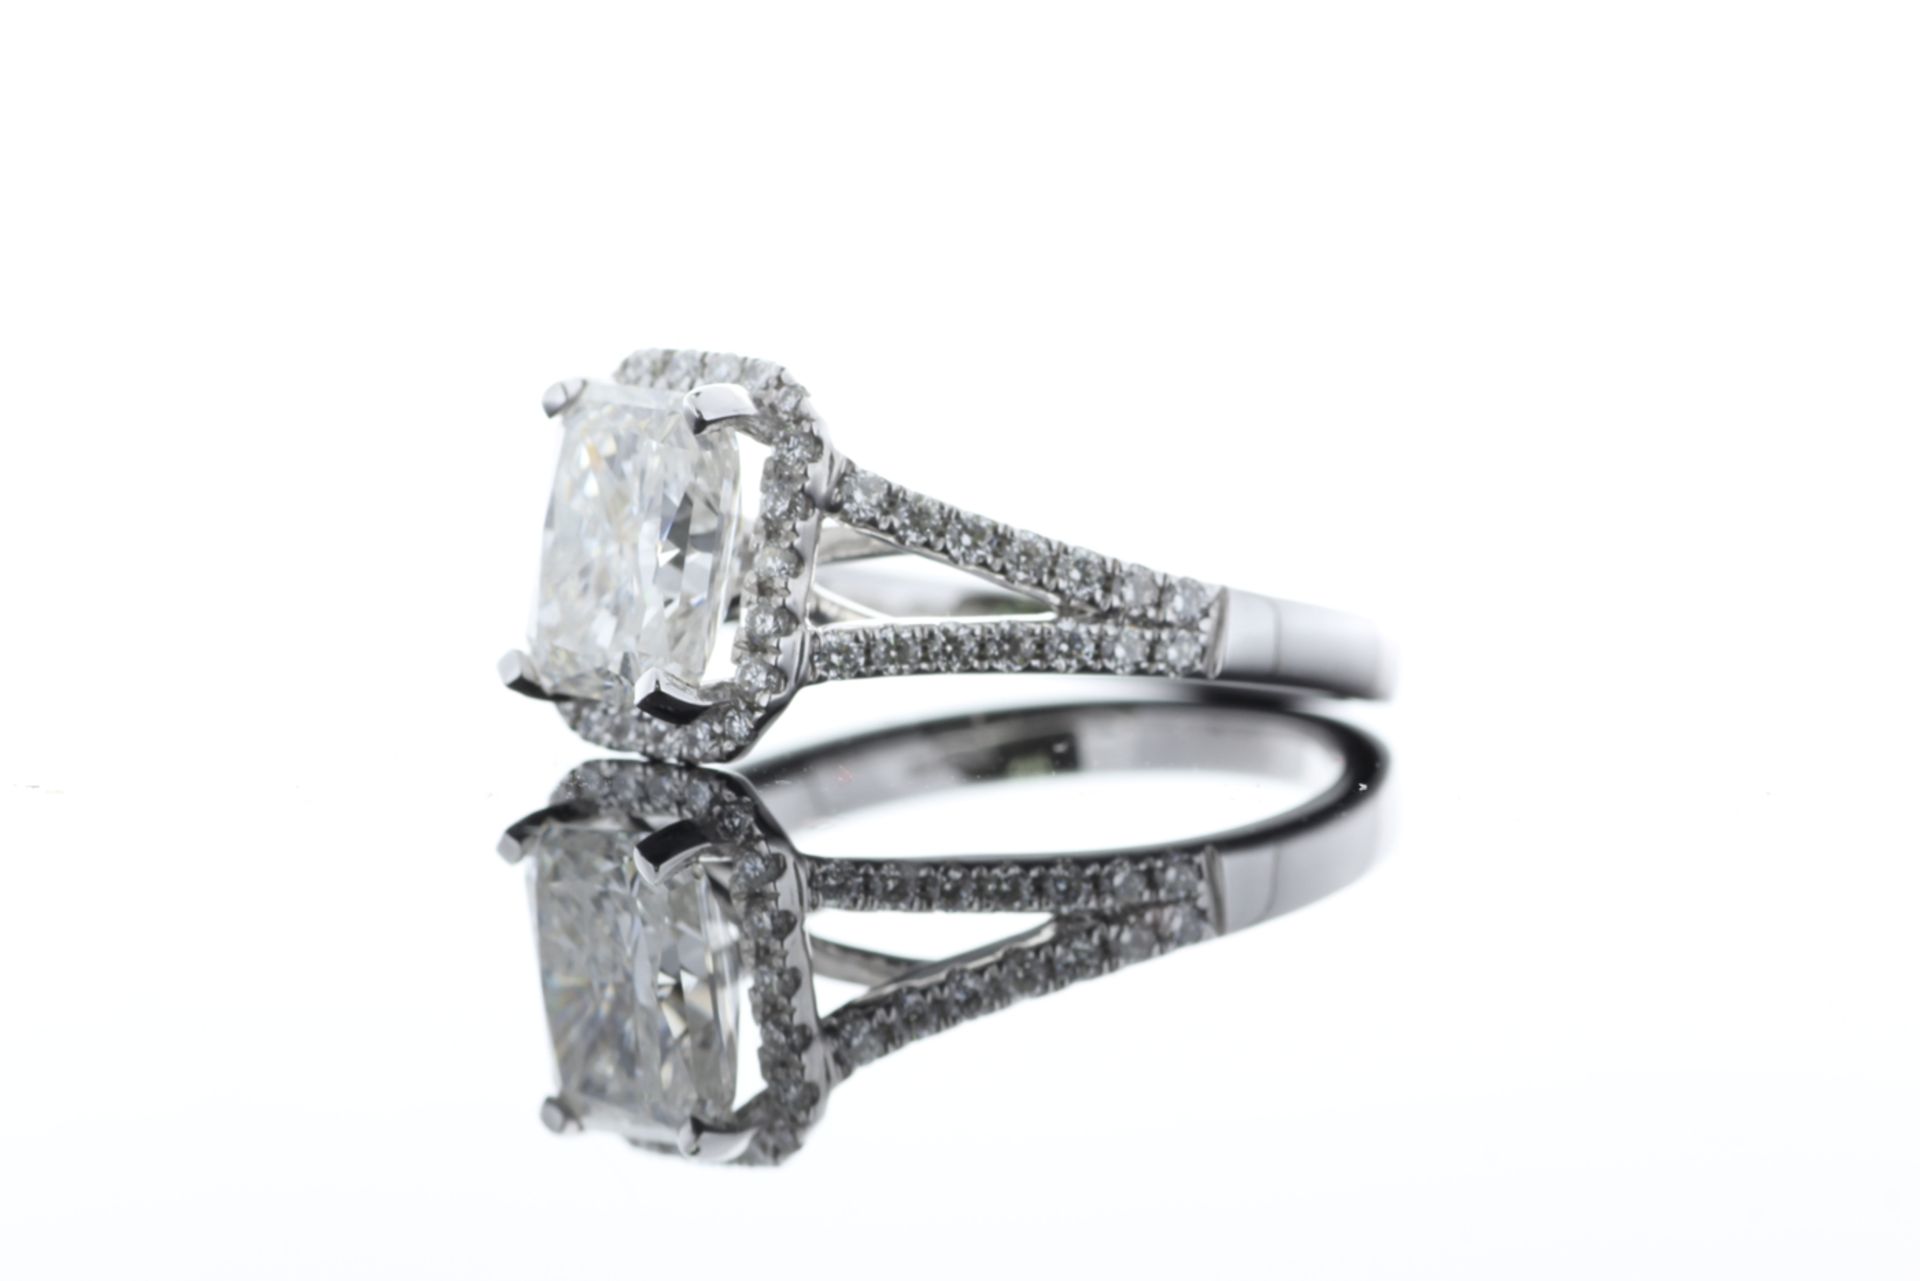 18ct White Gold Single Stone Radiant Cut Diamond With Halo Setting Ring 2.51 (2.01) - Image 12 of 73